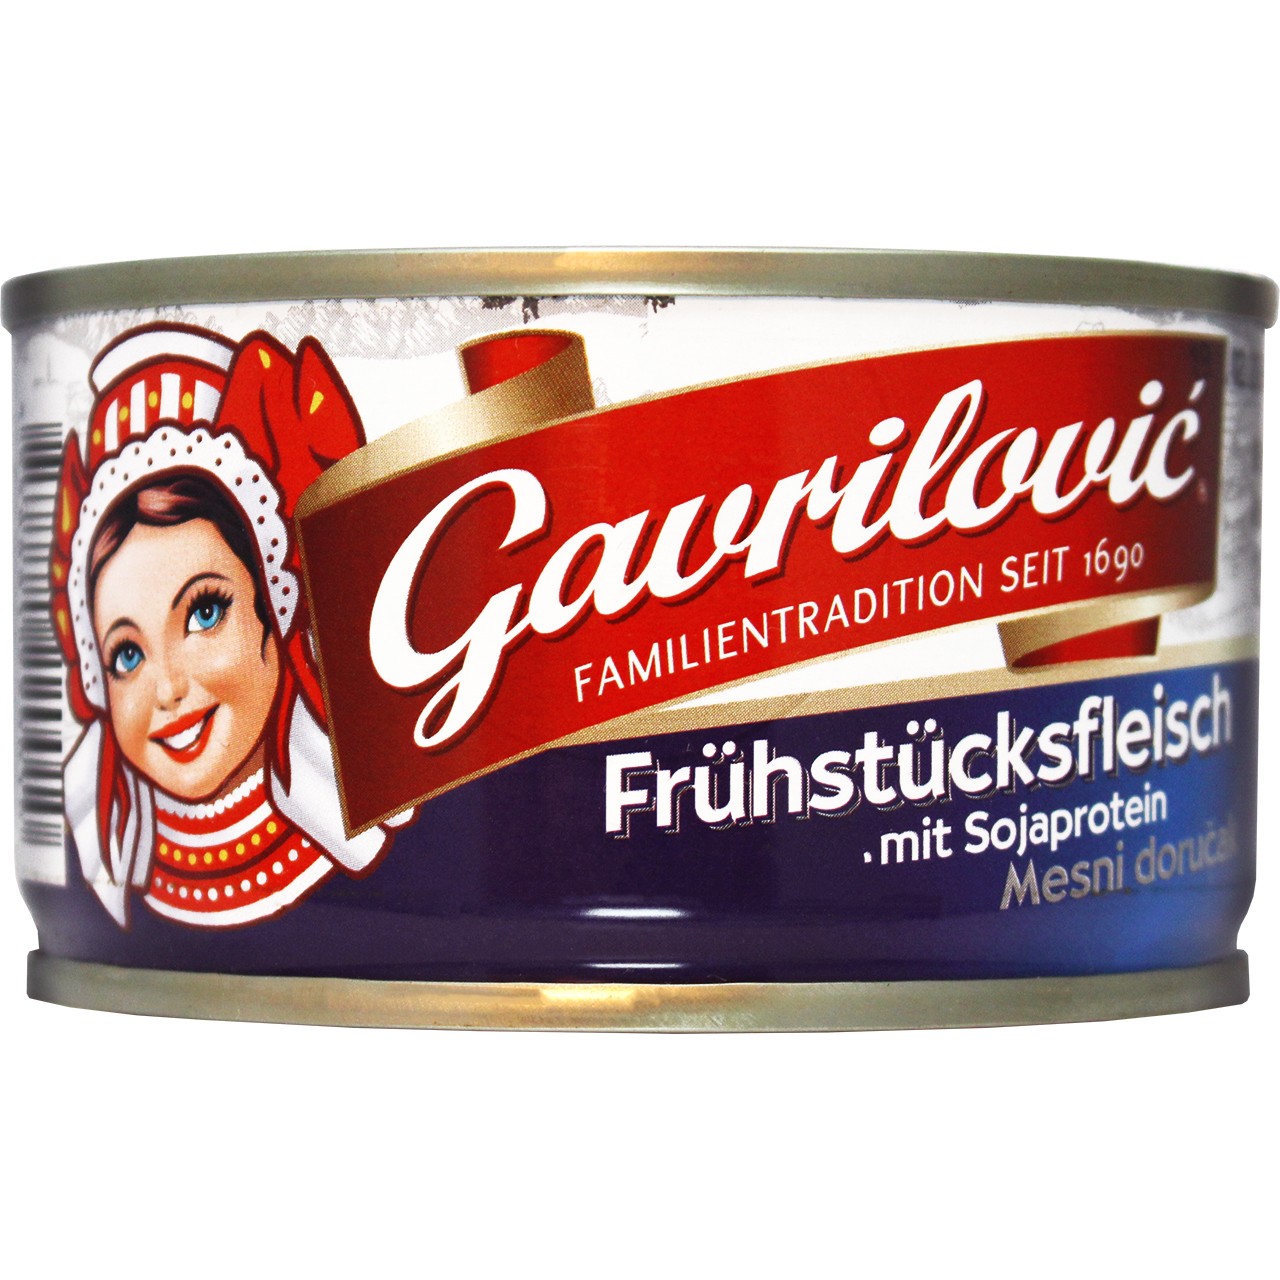 Frühstücksfleisch - Mesni doručak - Gavrilovic - Kroatien